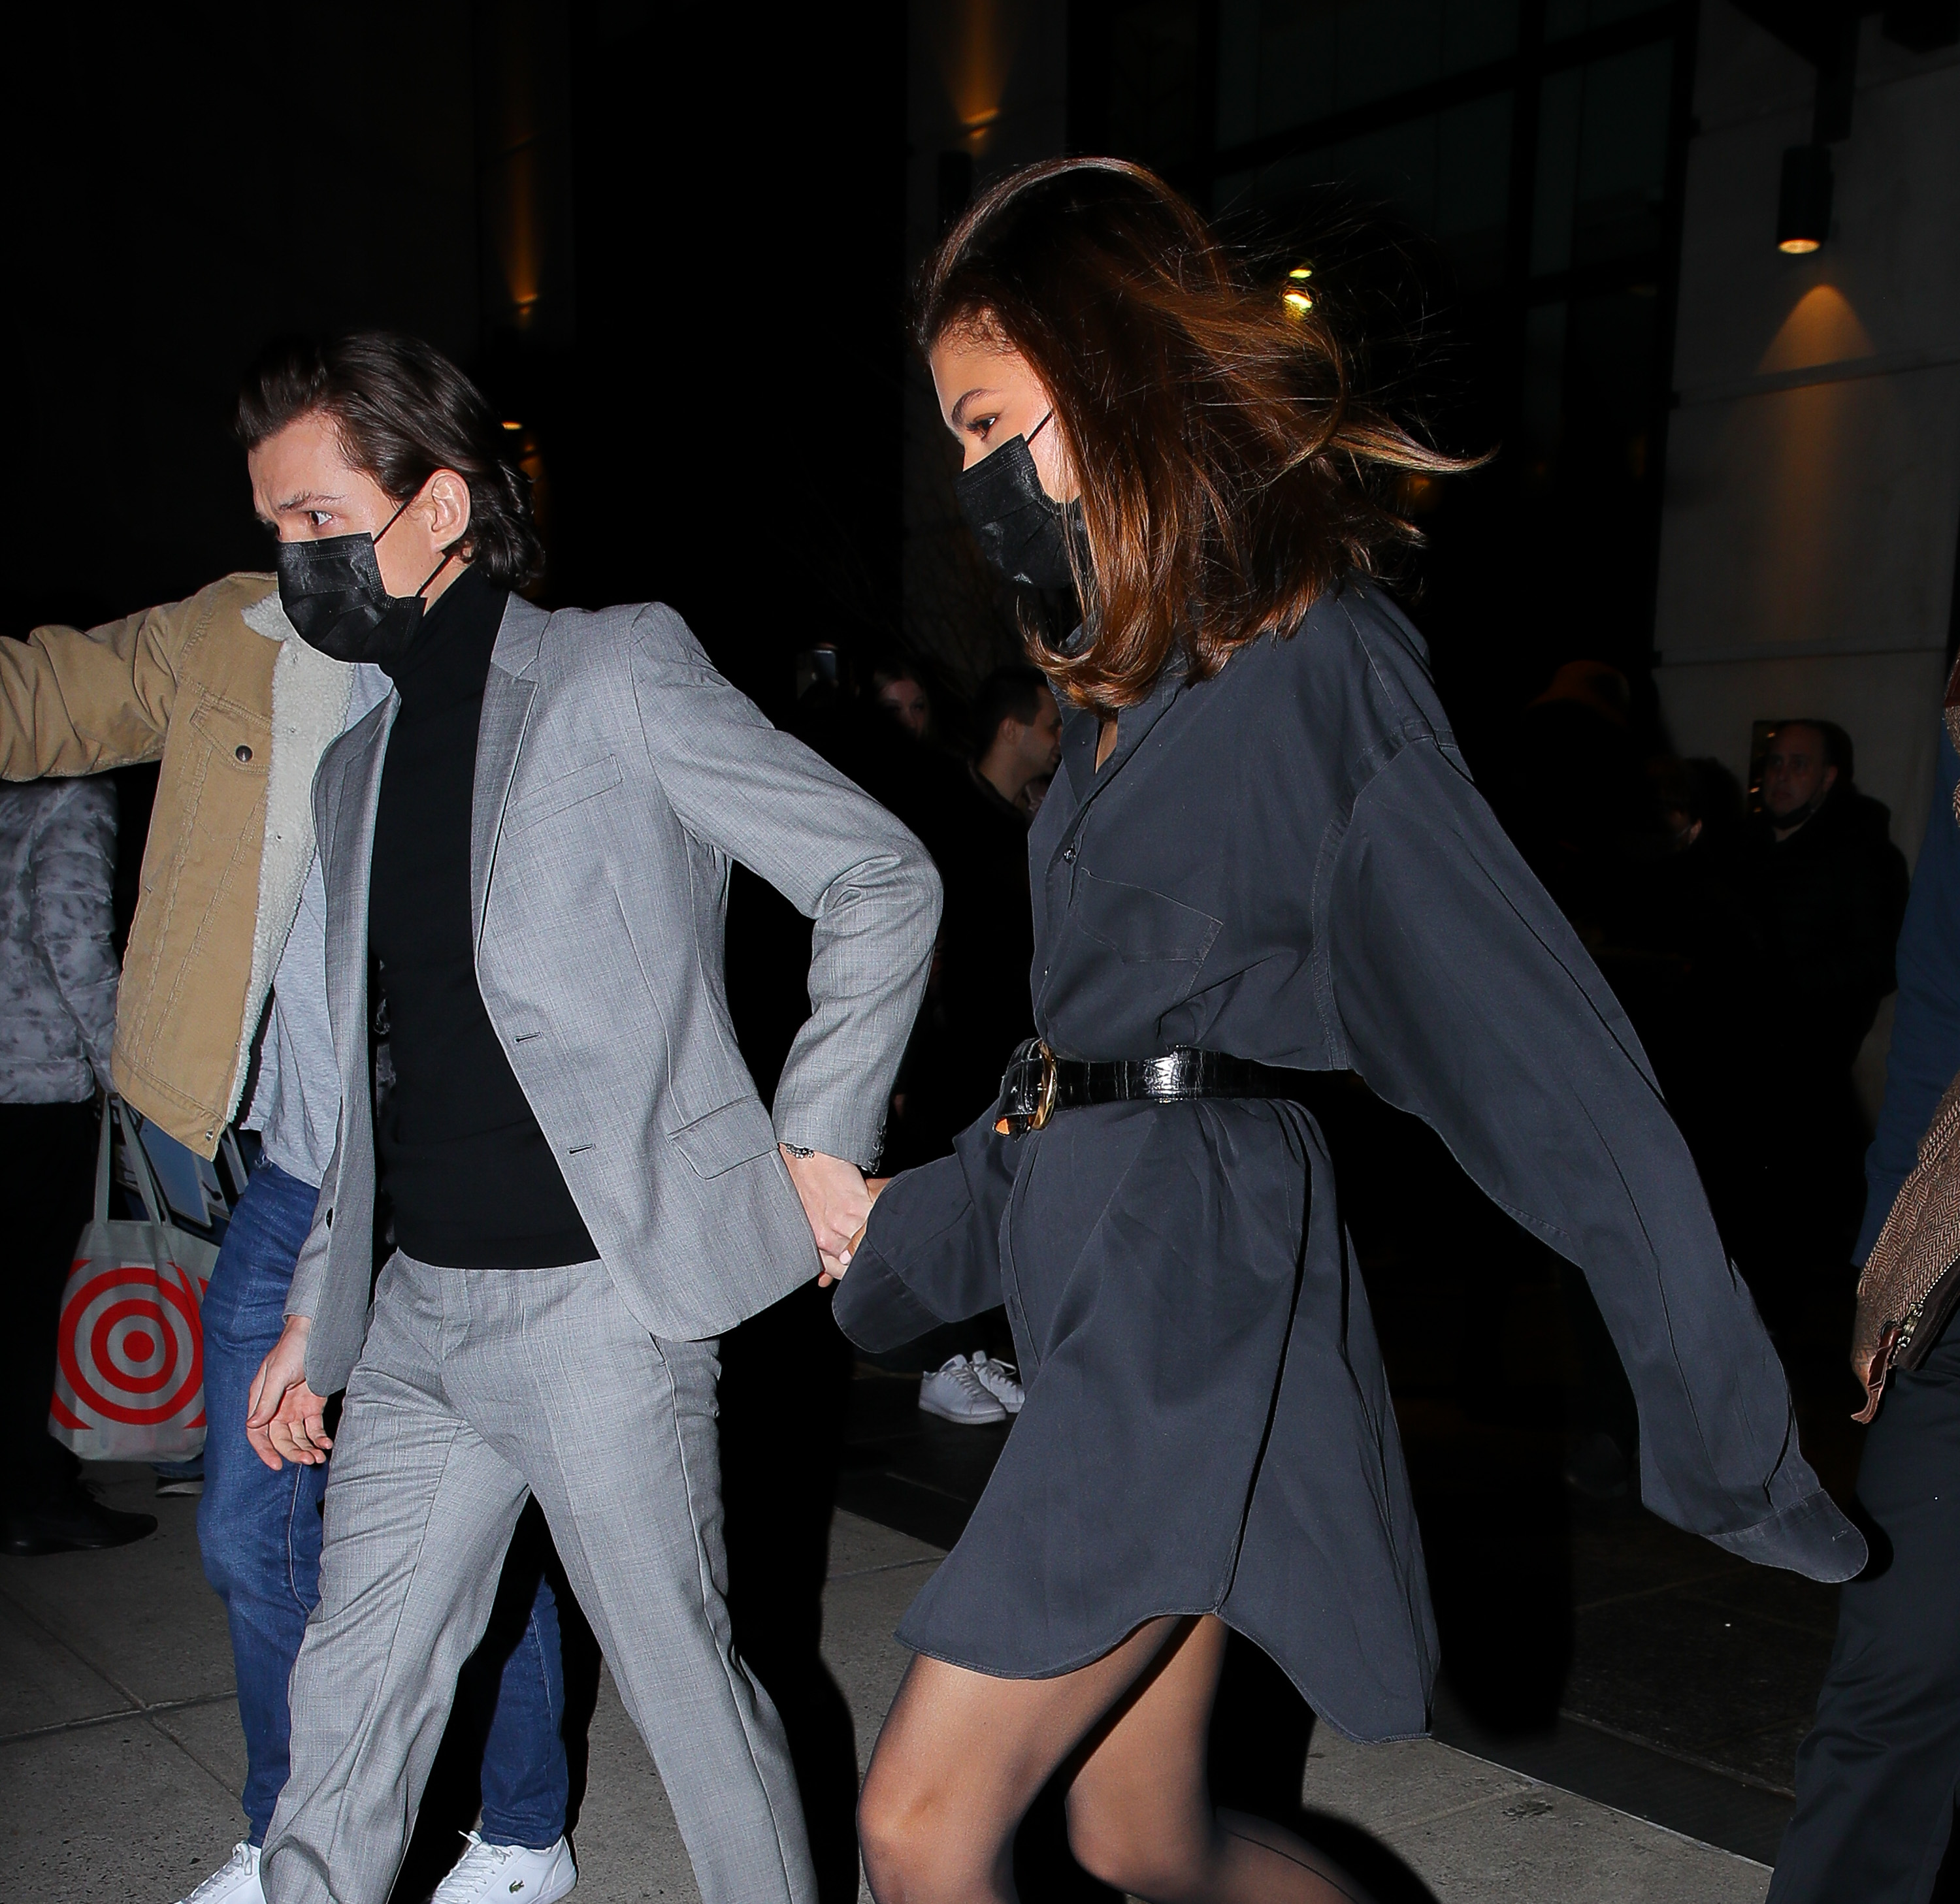 Tom Holland, Zendaya Hold Hands During Paris Date: Photo